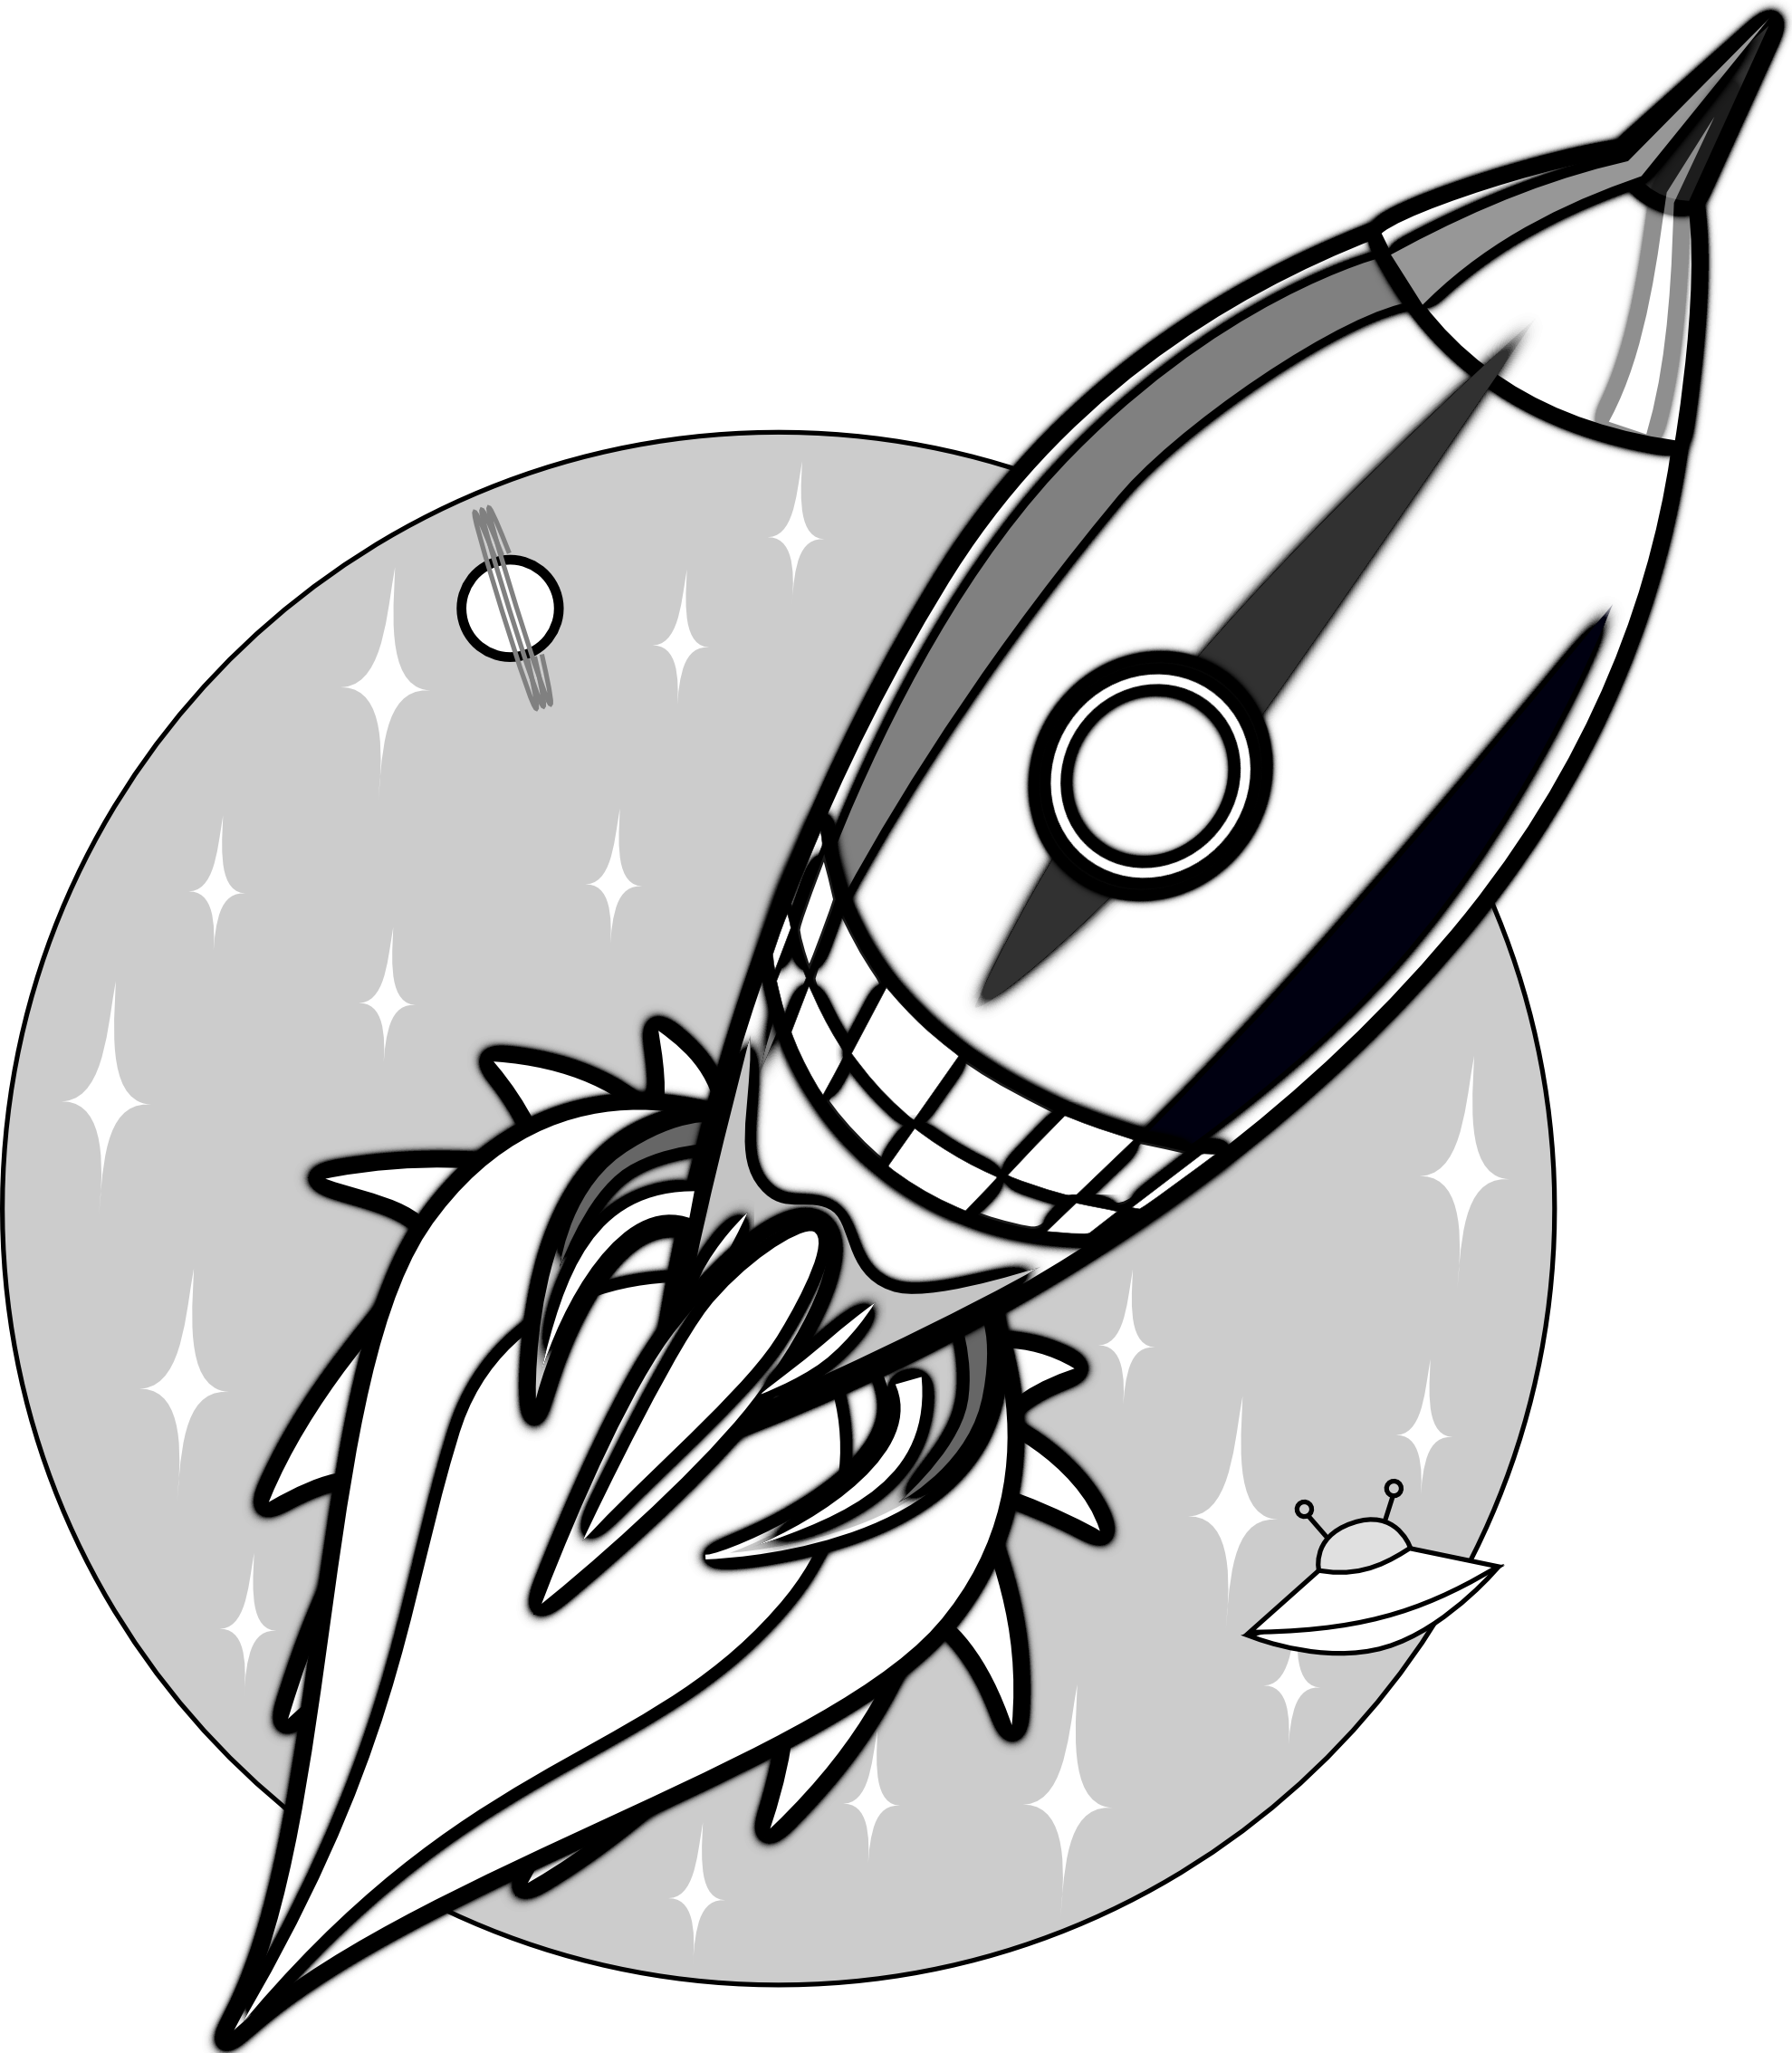 Space rocket clip art outline pics about space 2 image